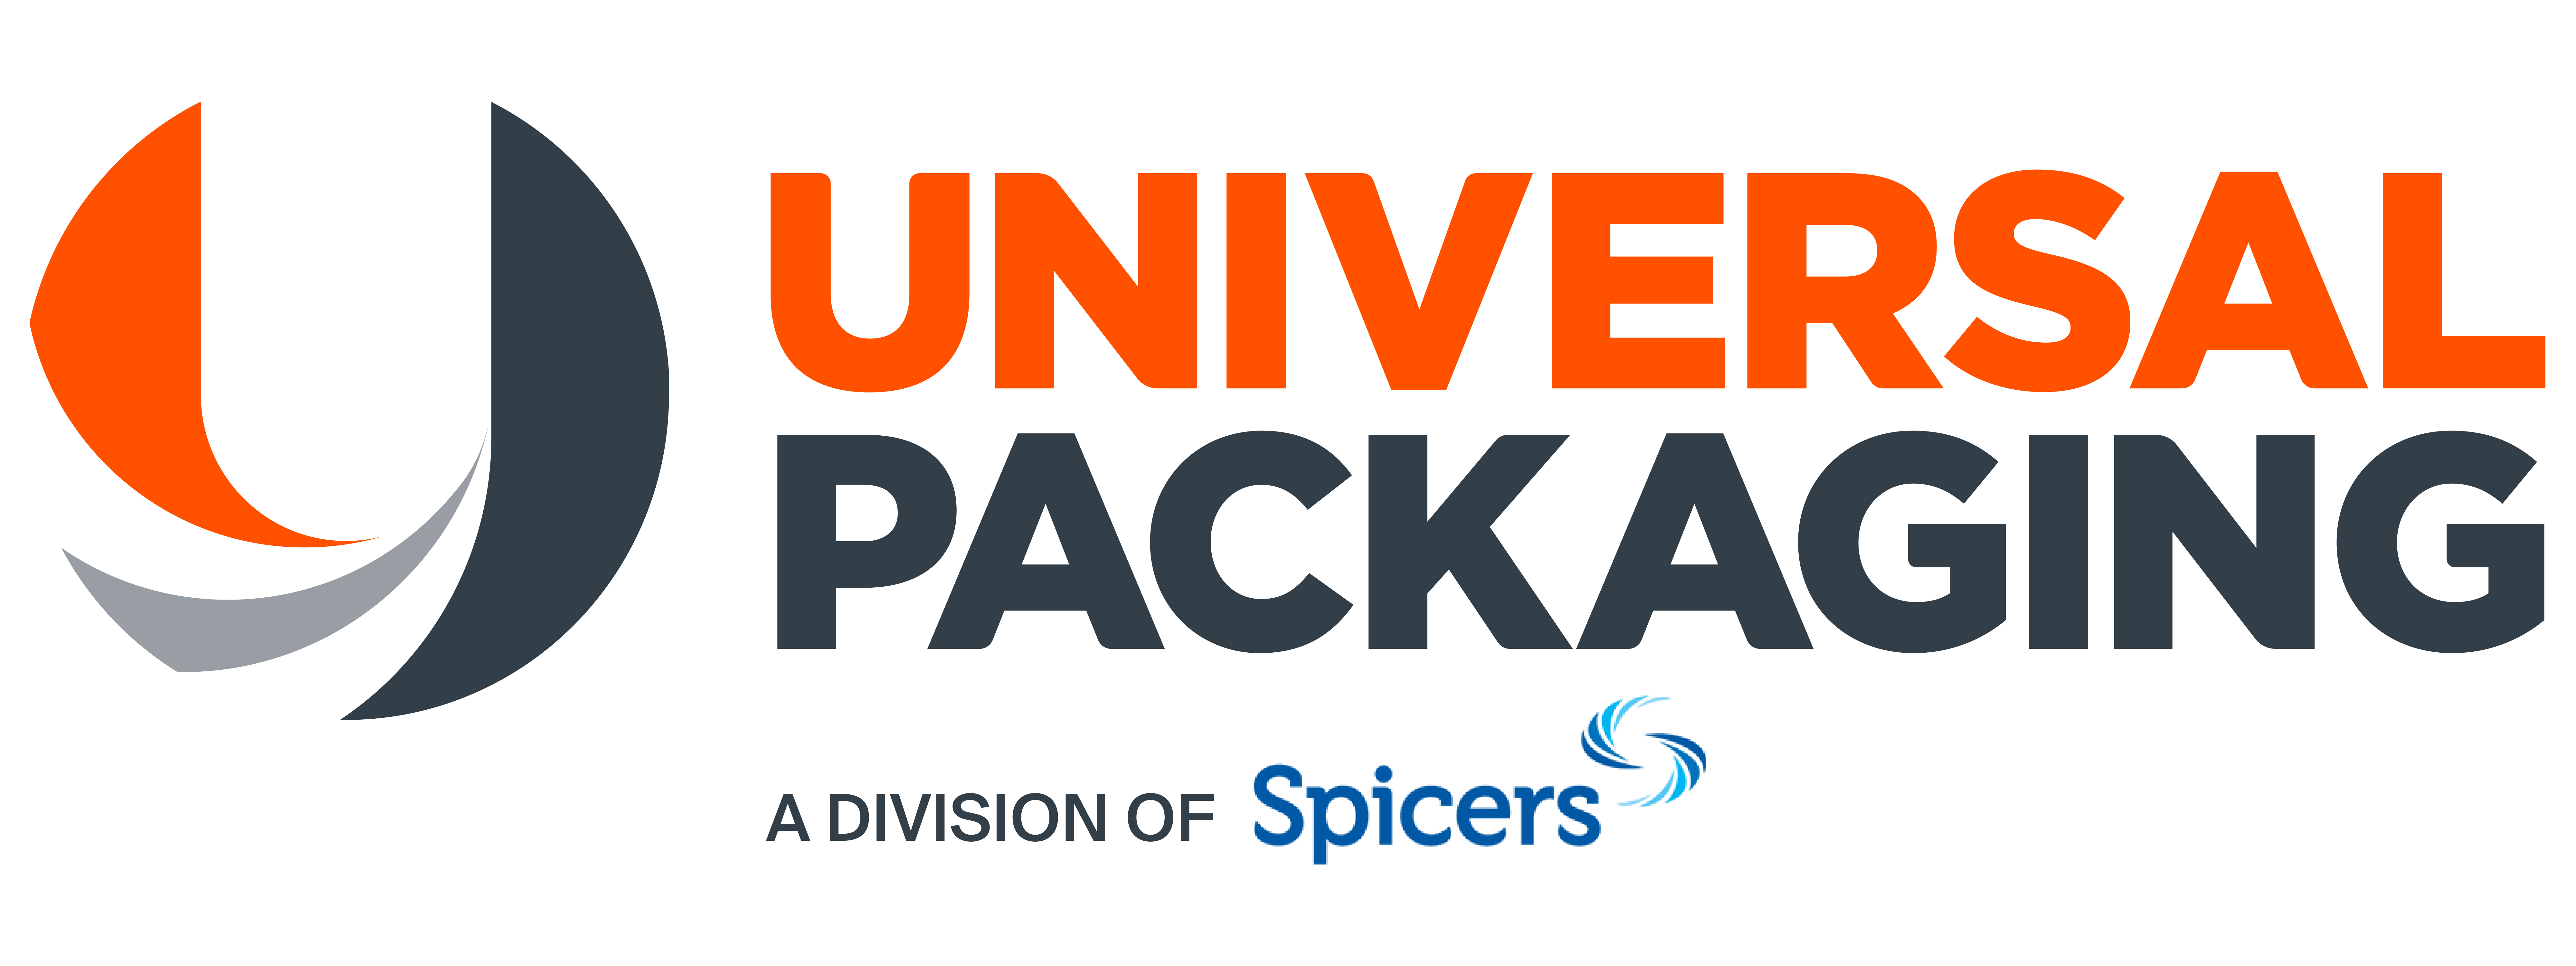 UP Spicers Logo RGB 002